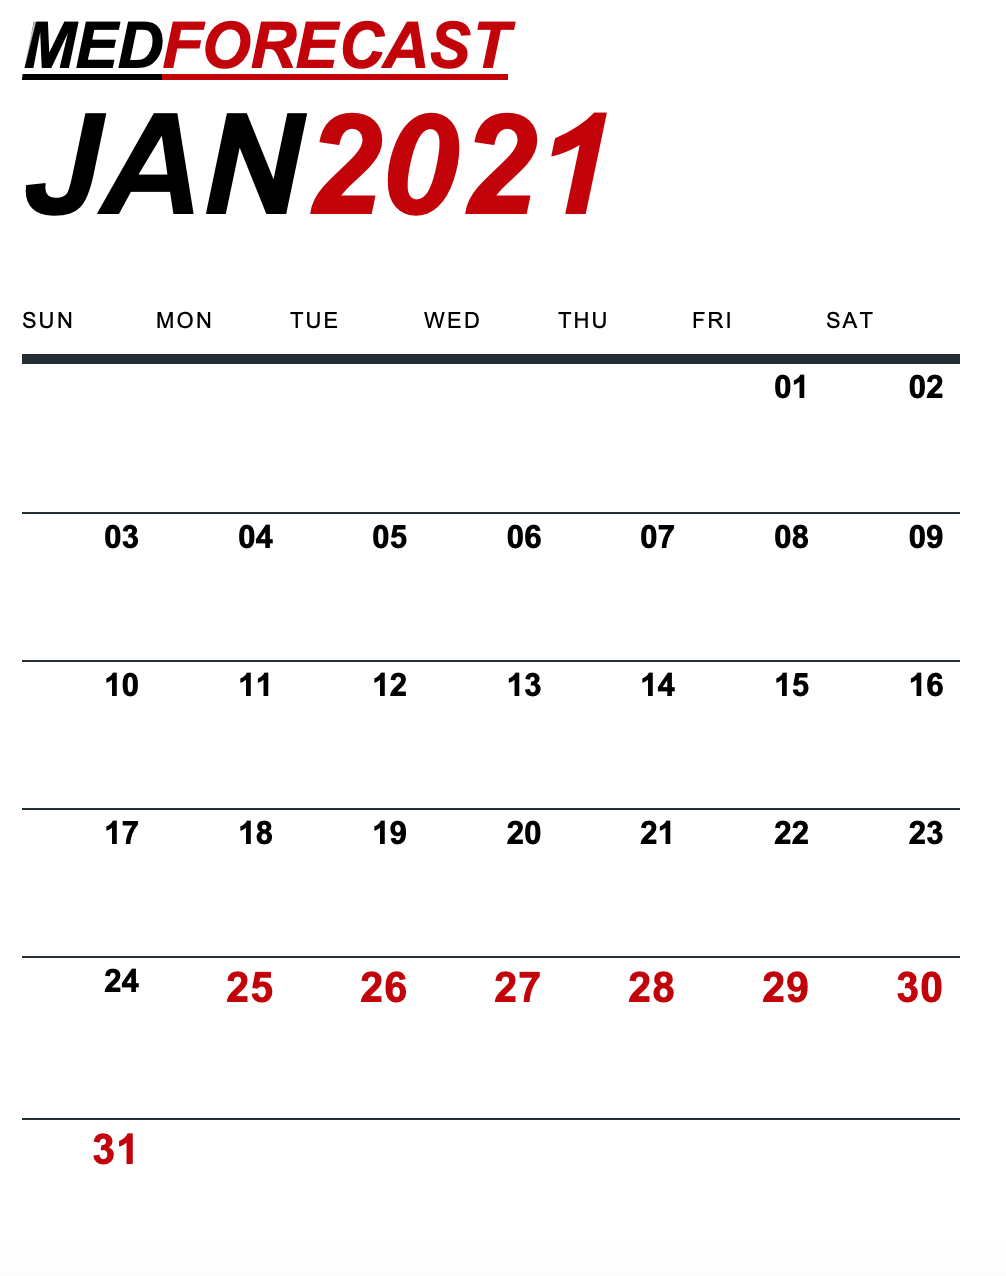 Medical News Forecast for January 25-31